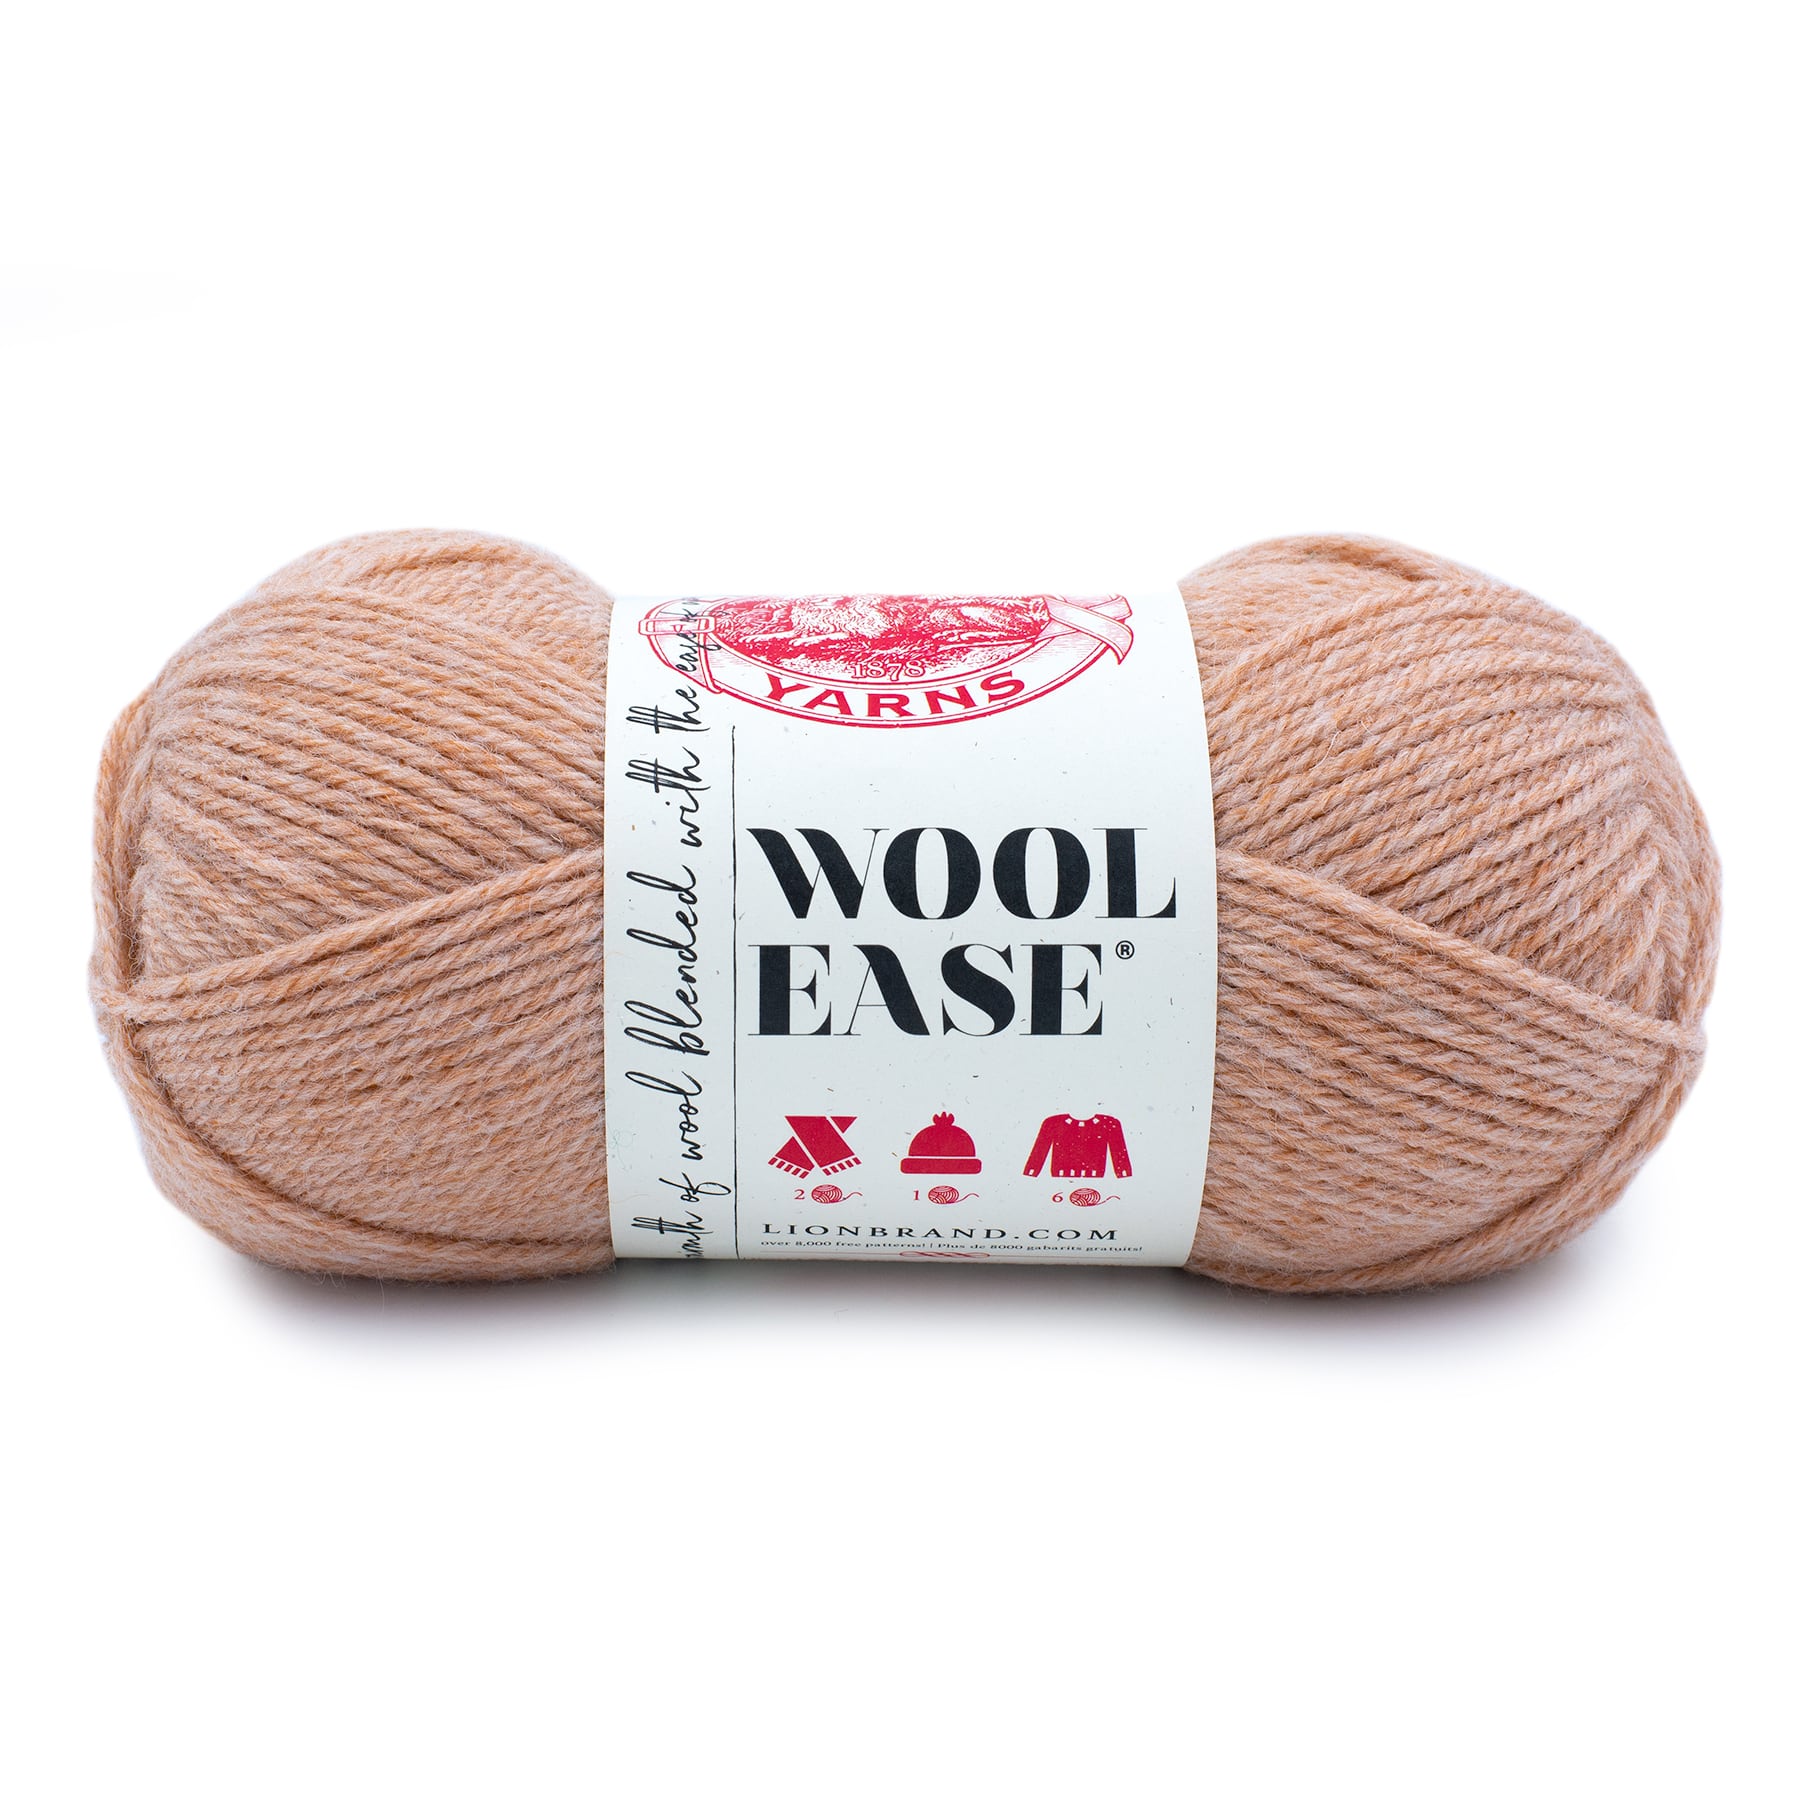 yarn of wool